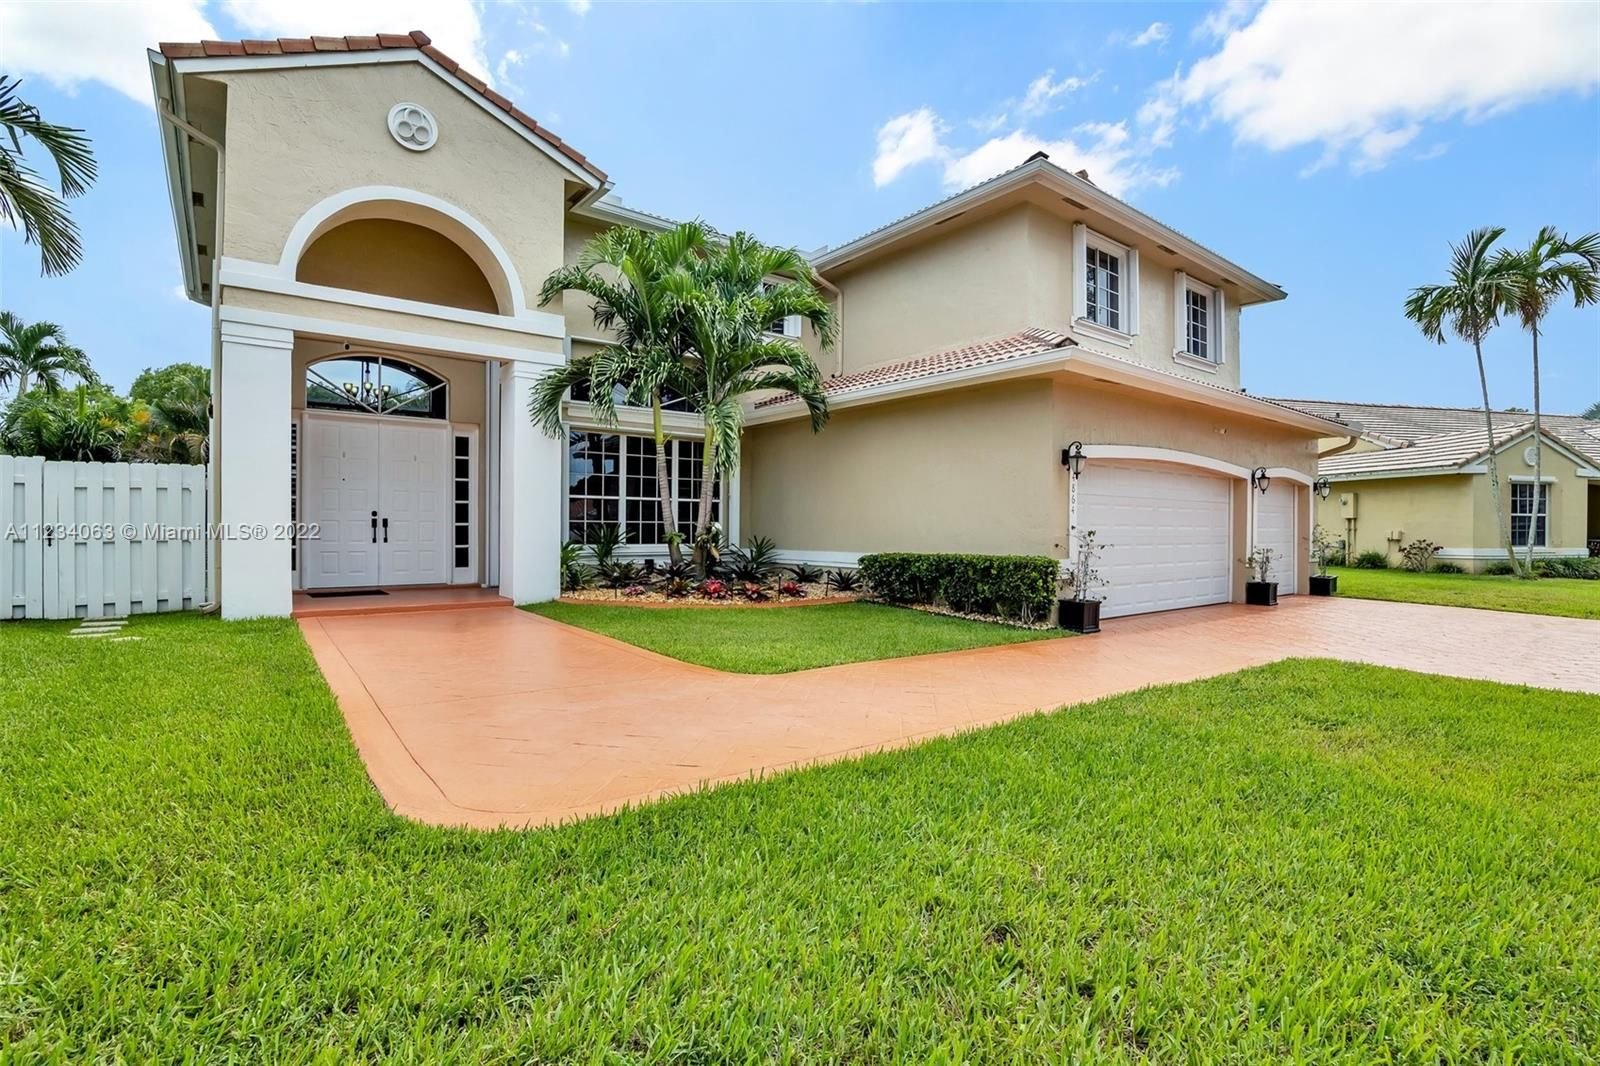 Real estate property located at 14864 39th Ct, Broward County, Miramar, FL